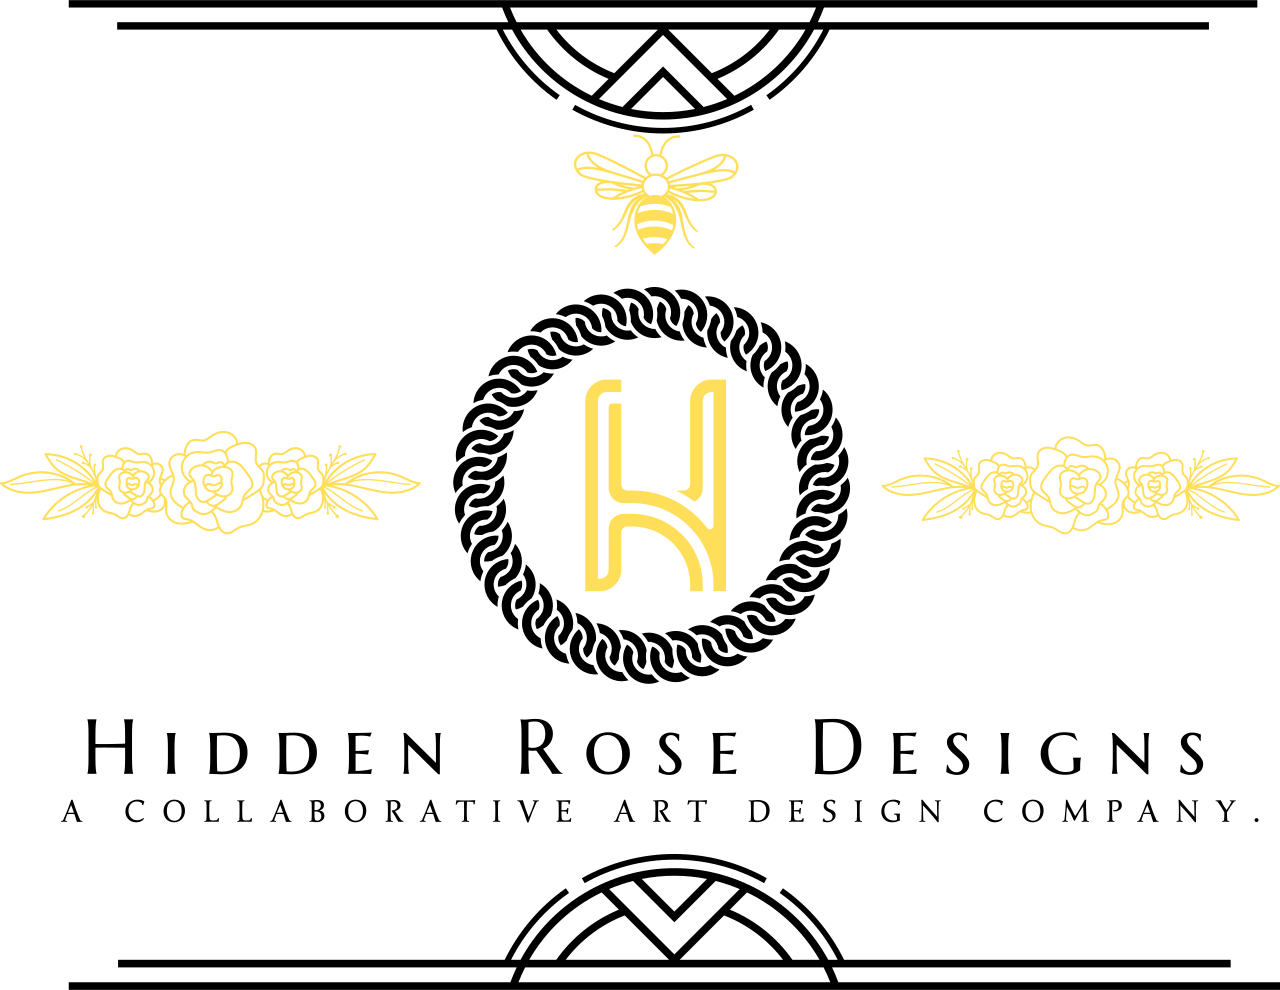 Hidden Rose Designs's logo